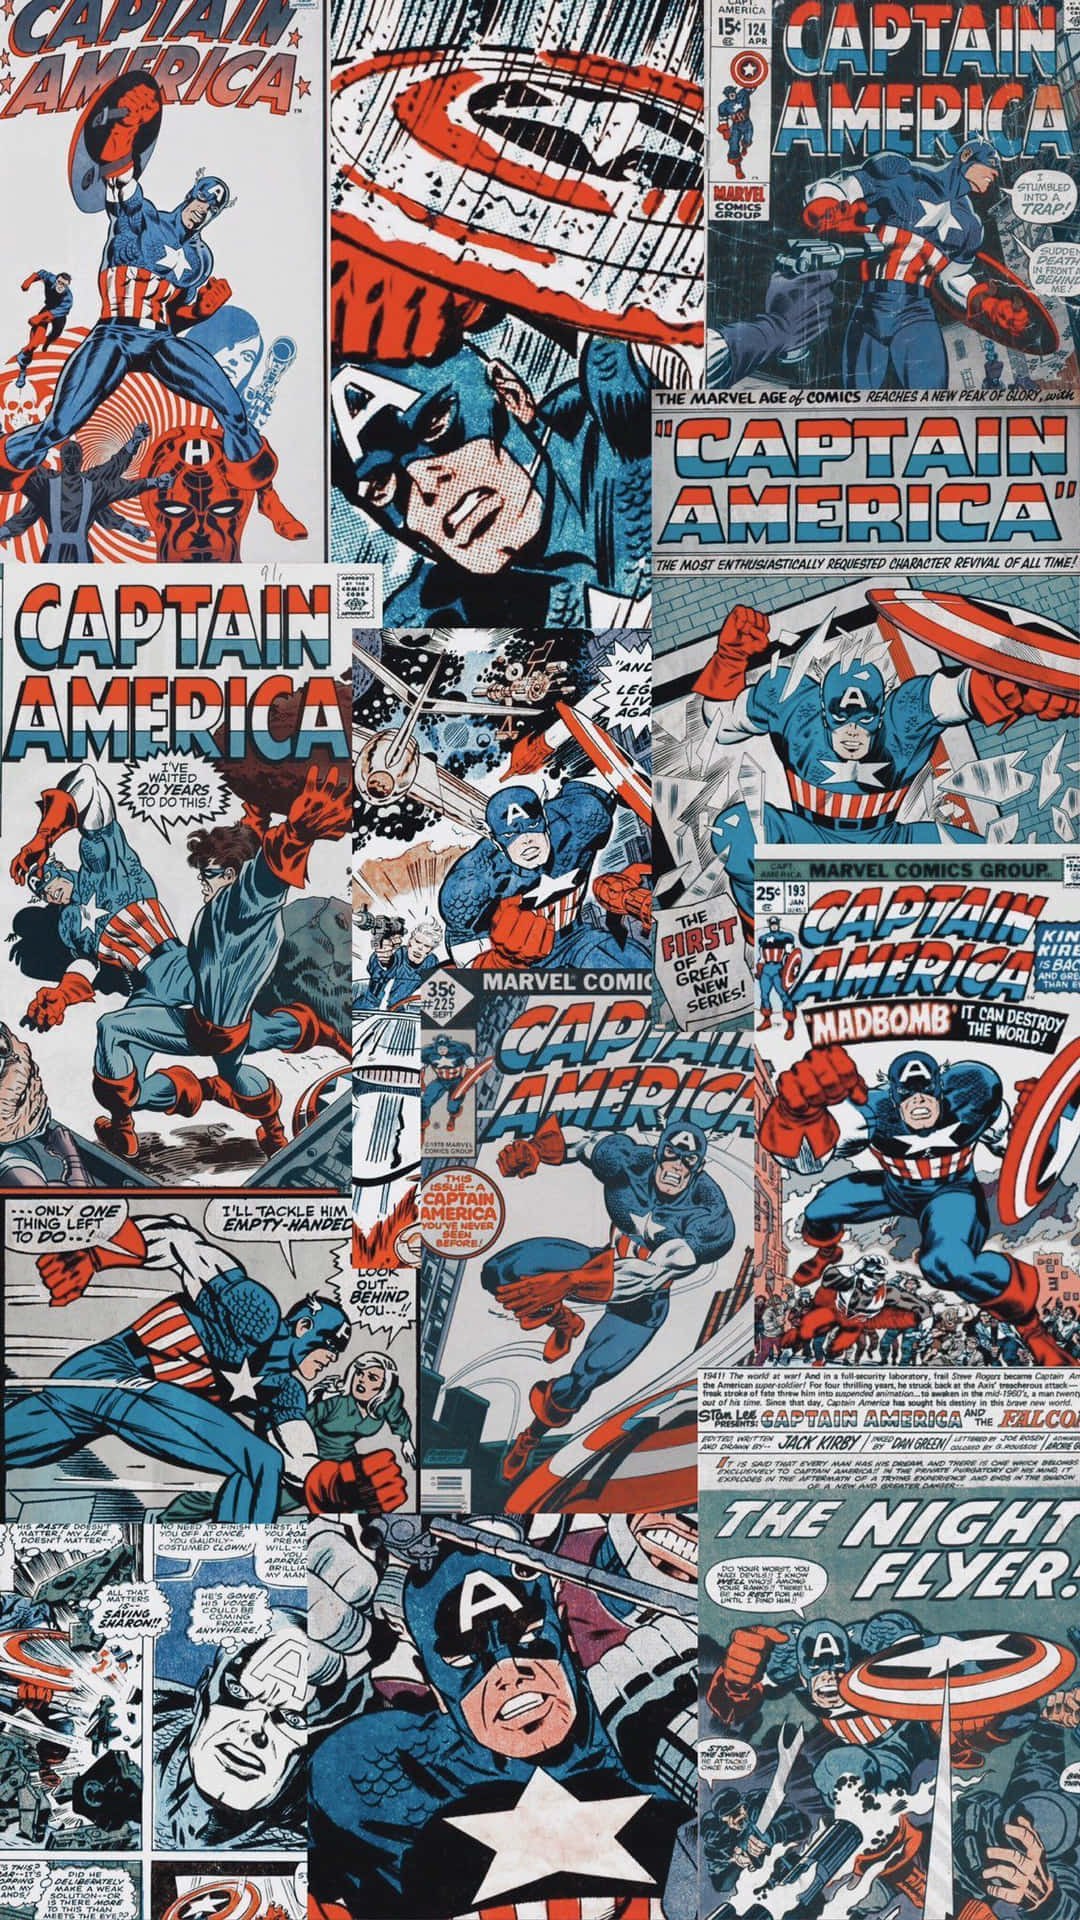 Marvel's classic comic book hero, Retro Captain America. Wallpaper